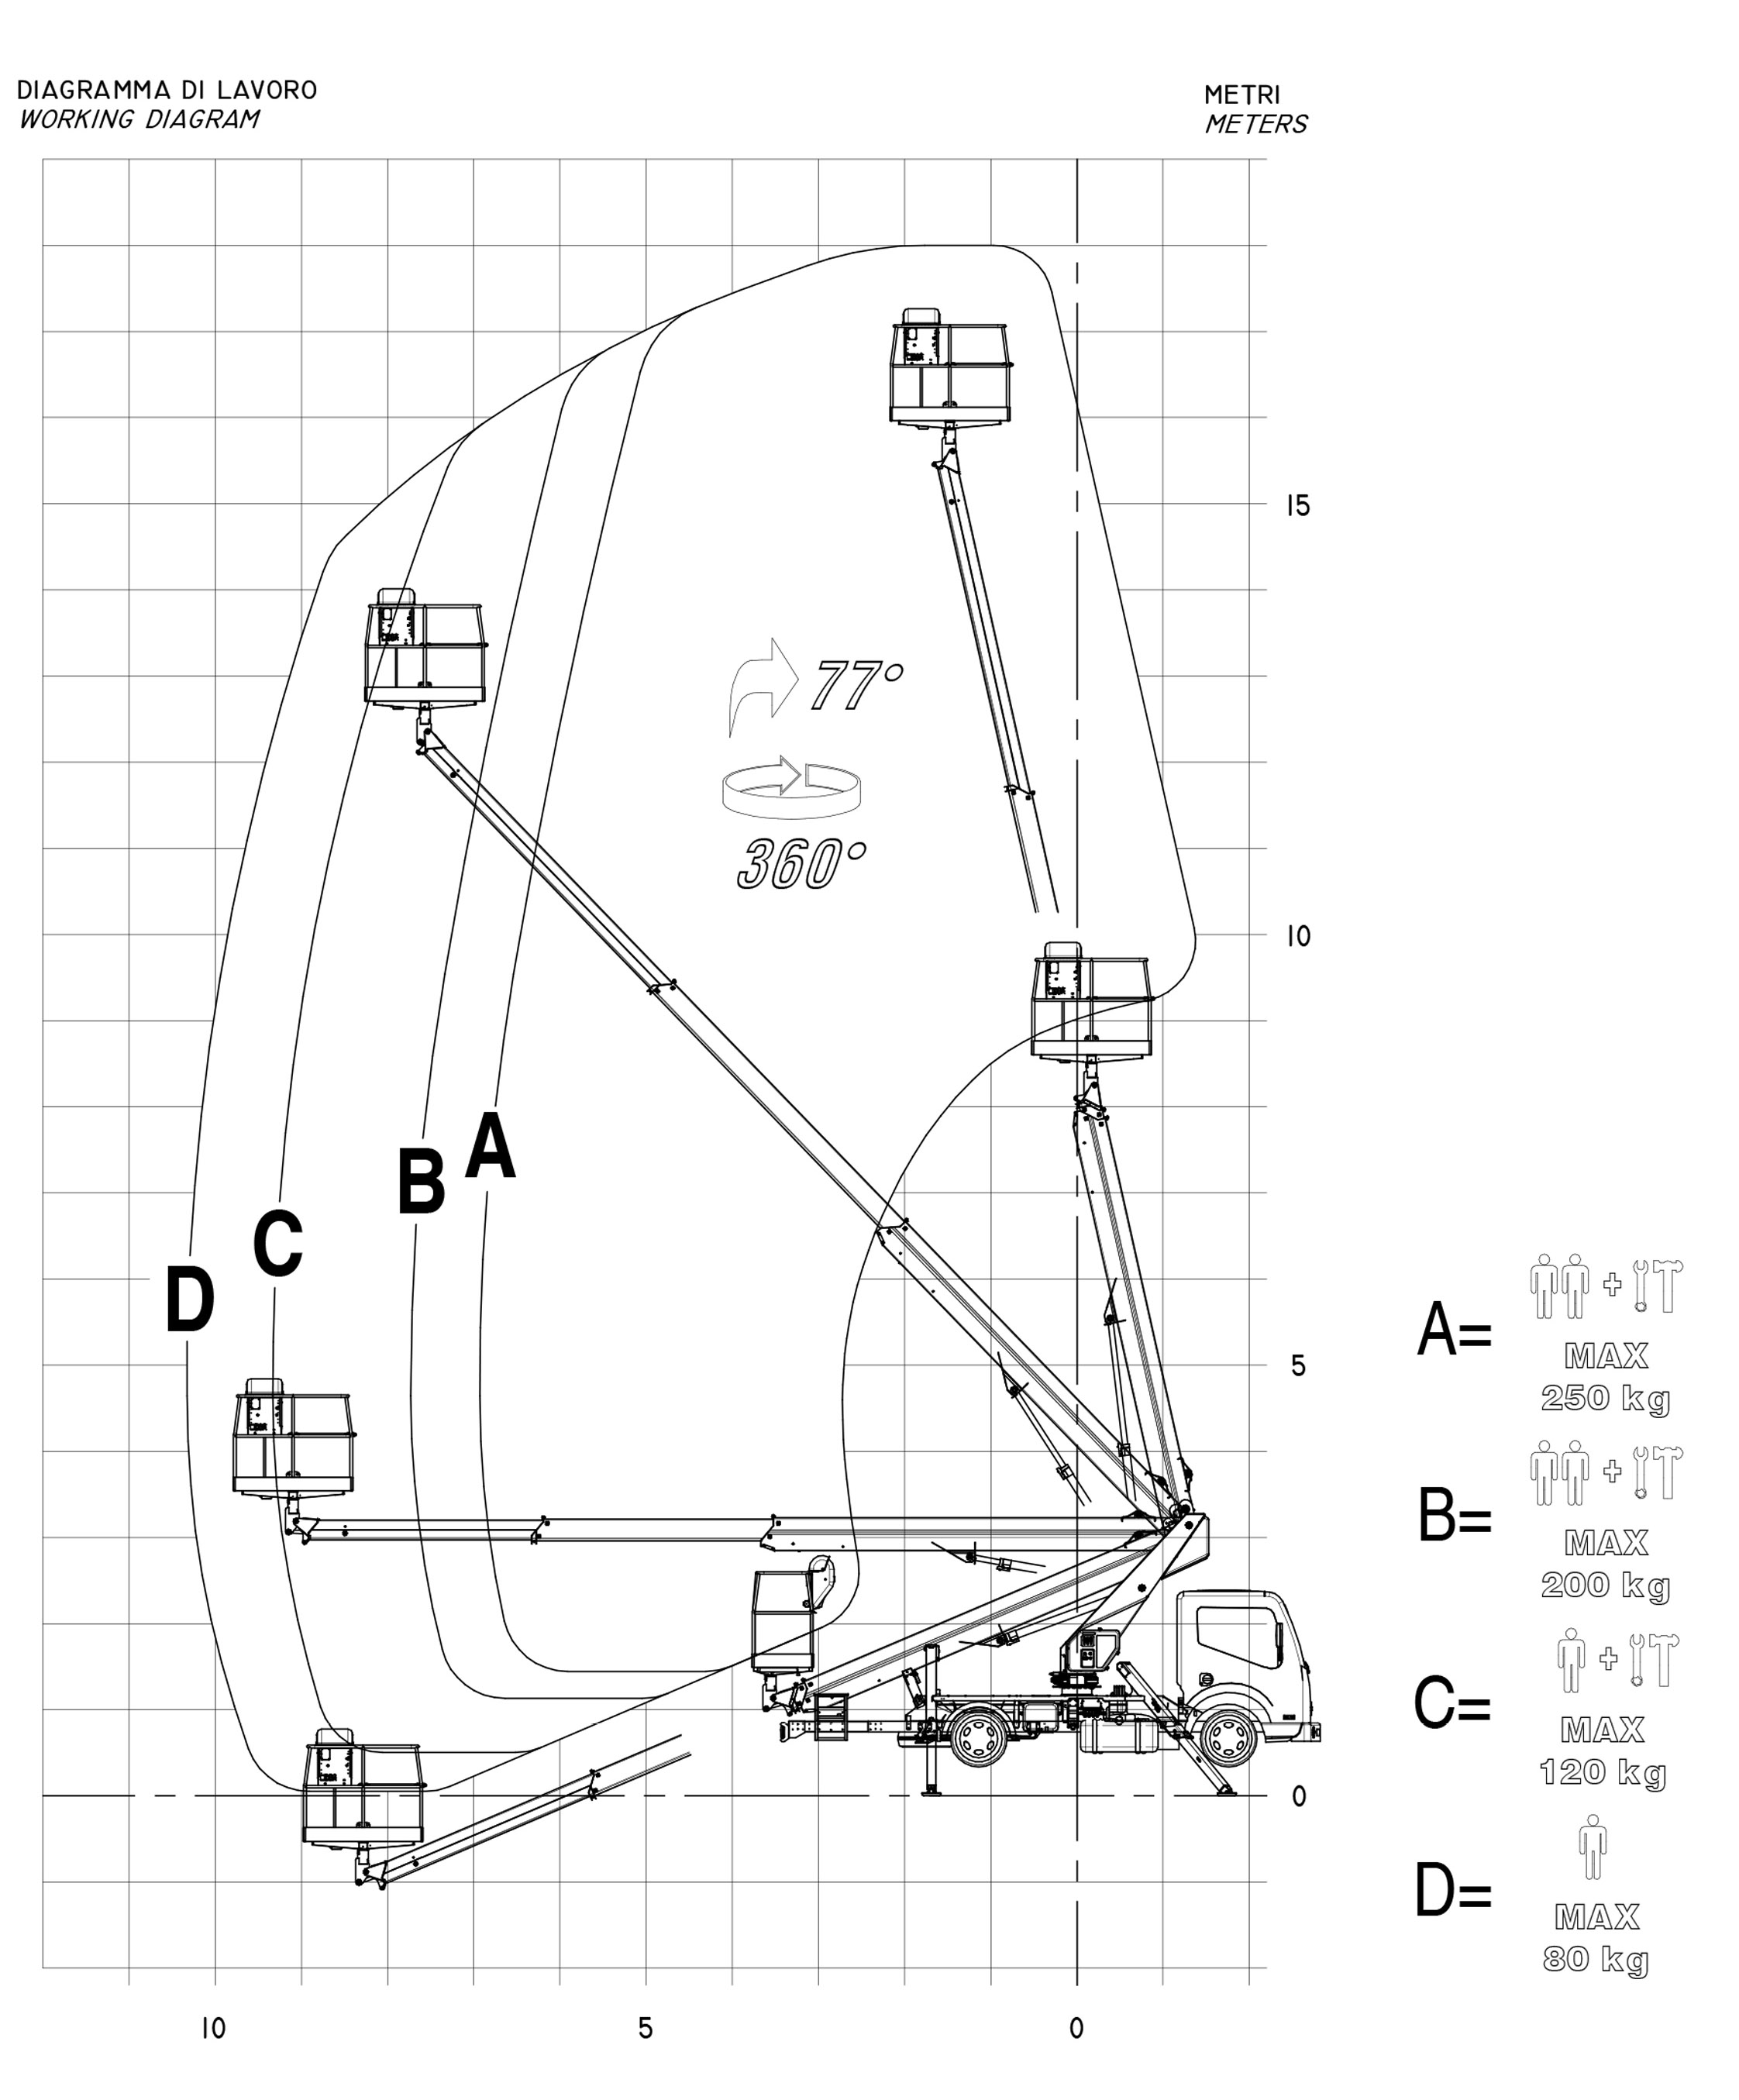 working diagram PT 180